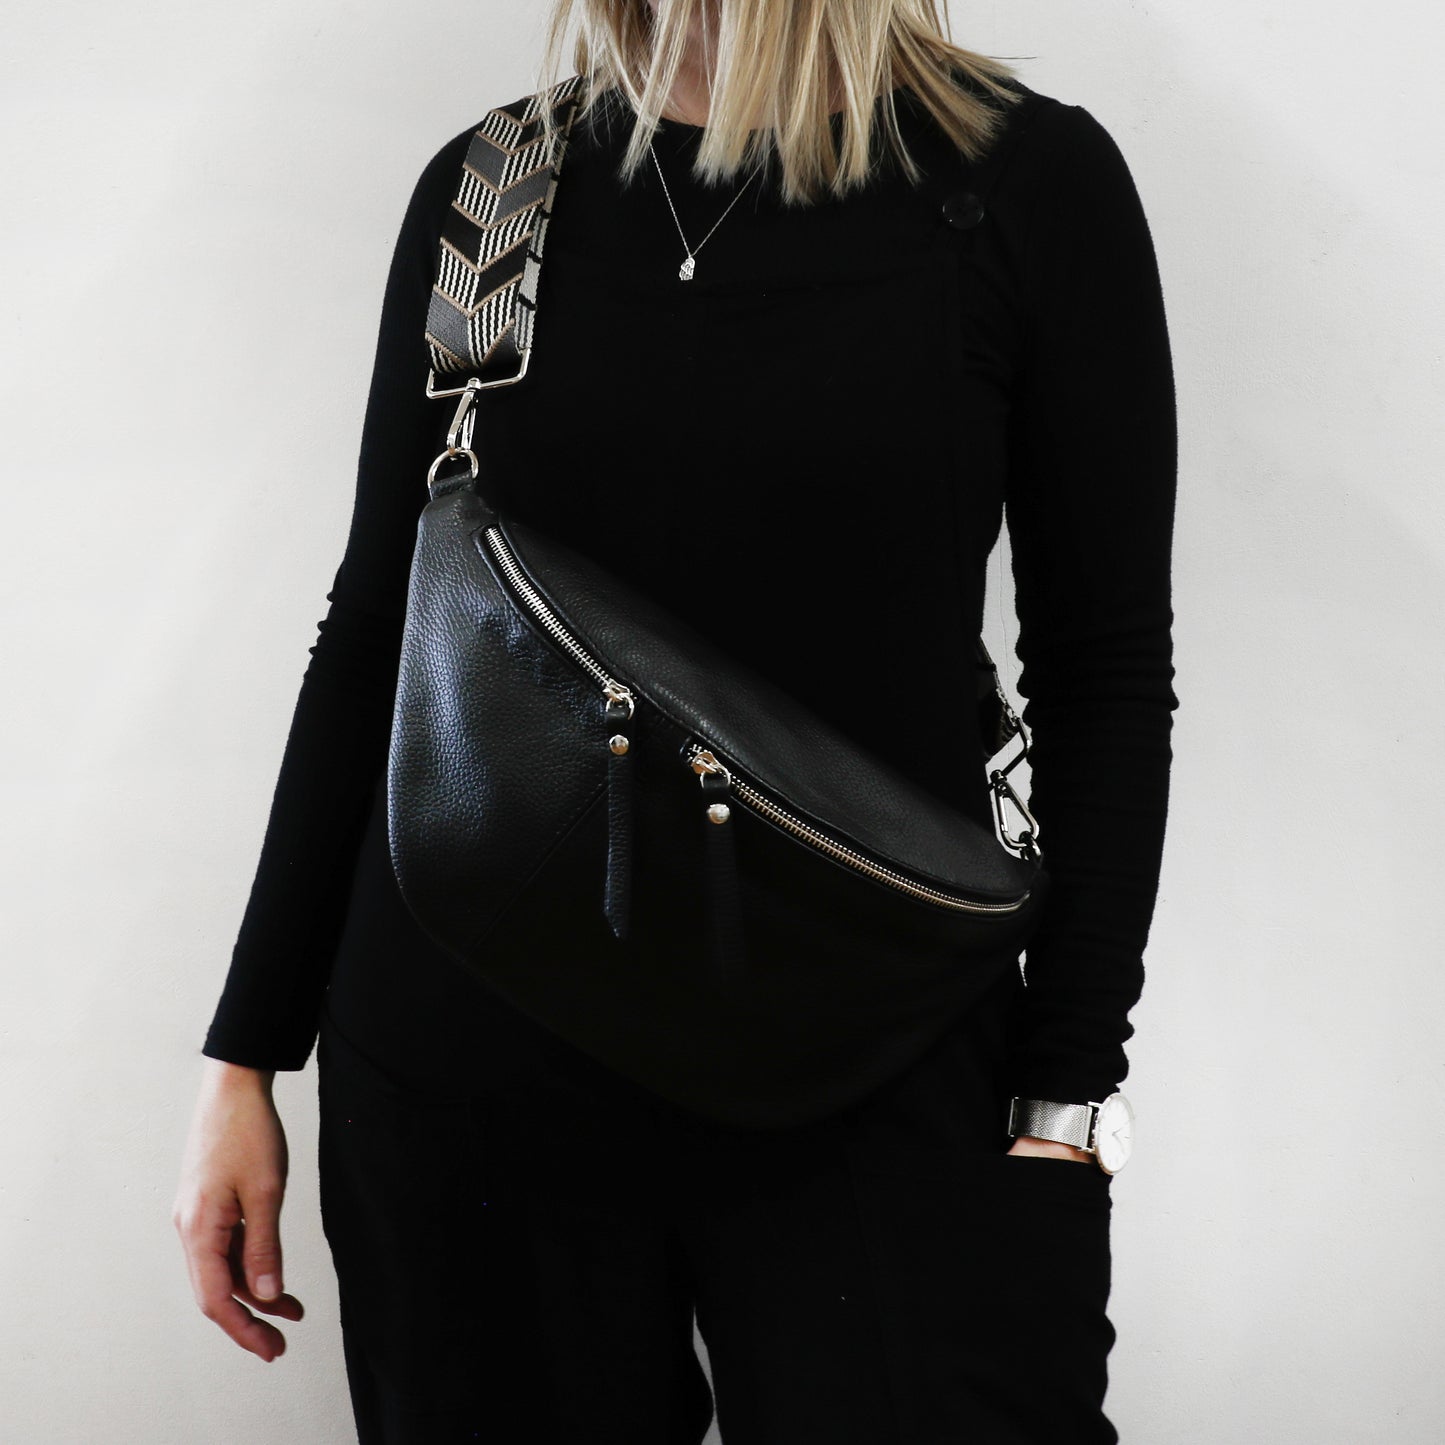 Large Leather Sling Bag with Patterned Strap - Black